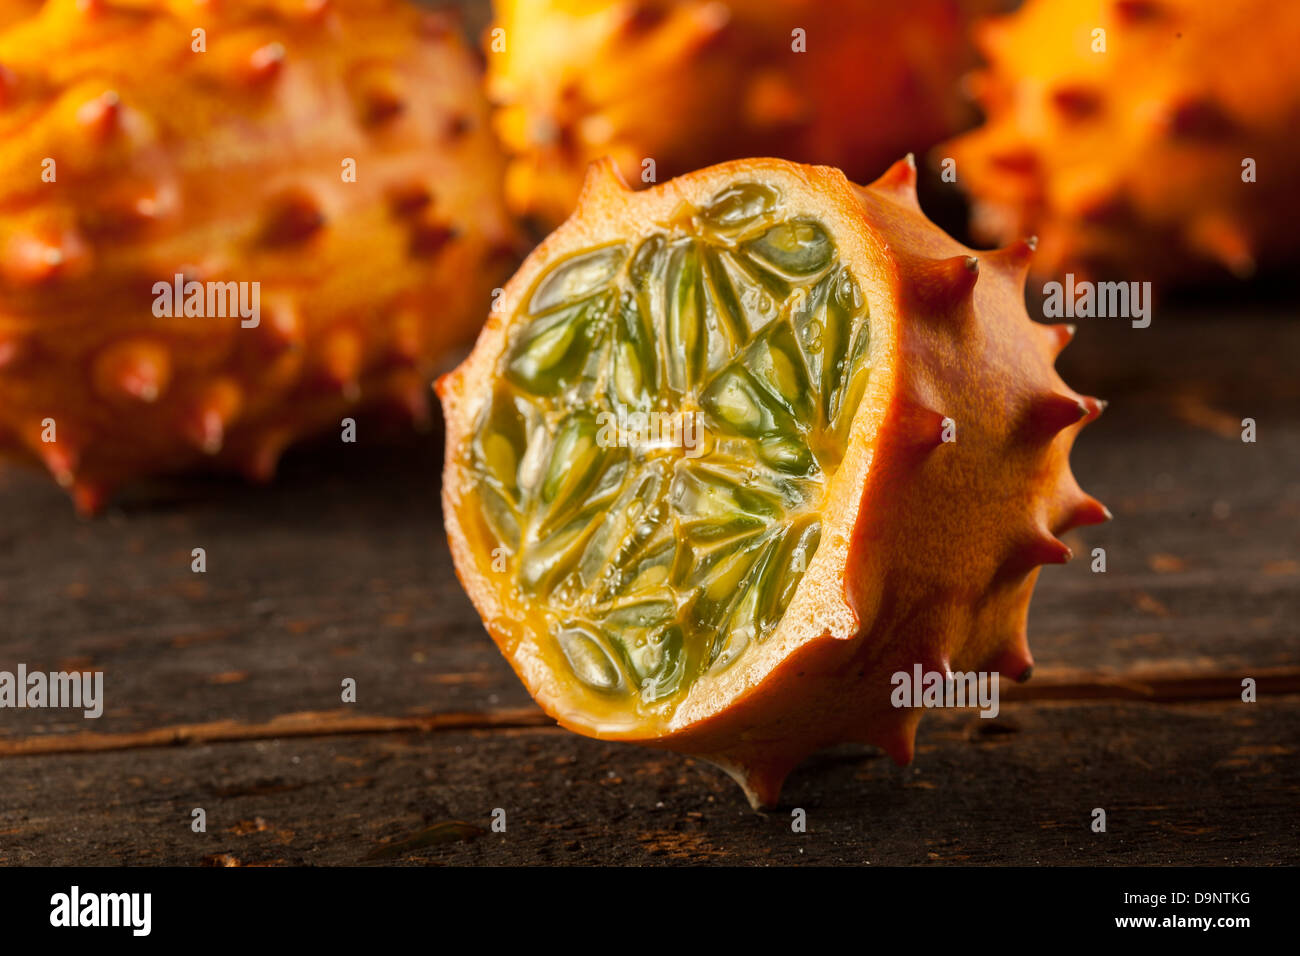 Organic Orange Kiwano Melon with Prickly Spikes Stock Photo